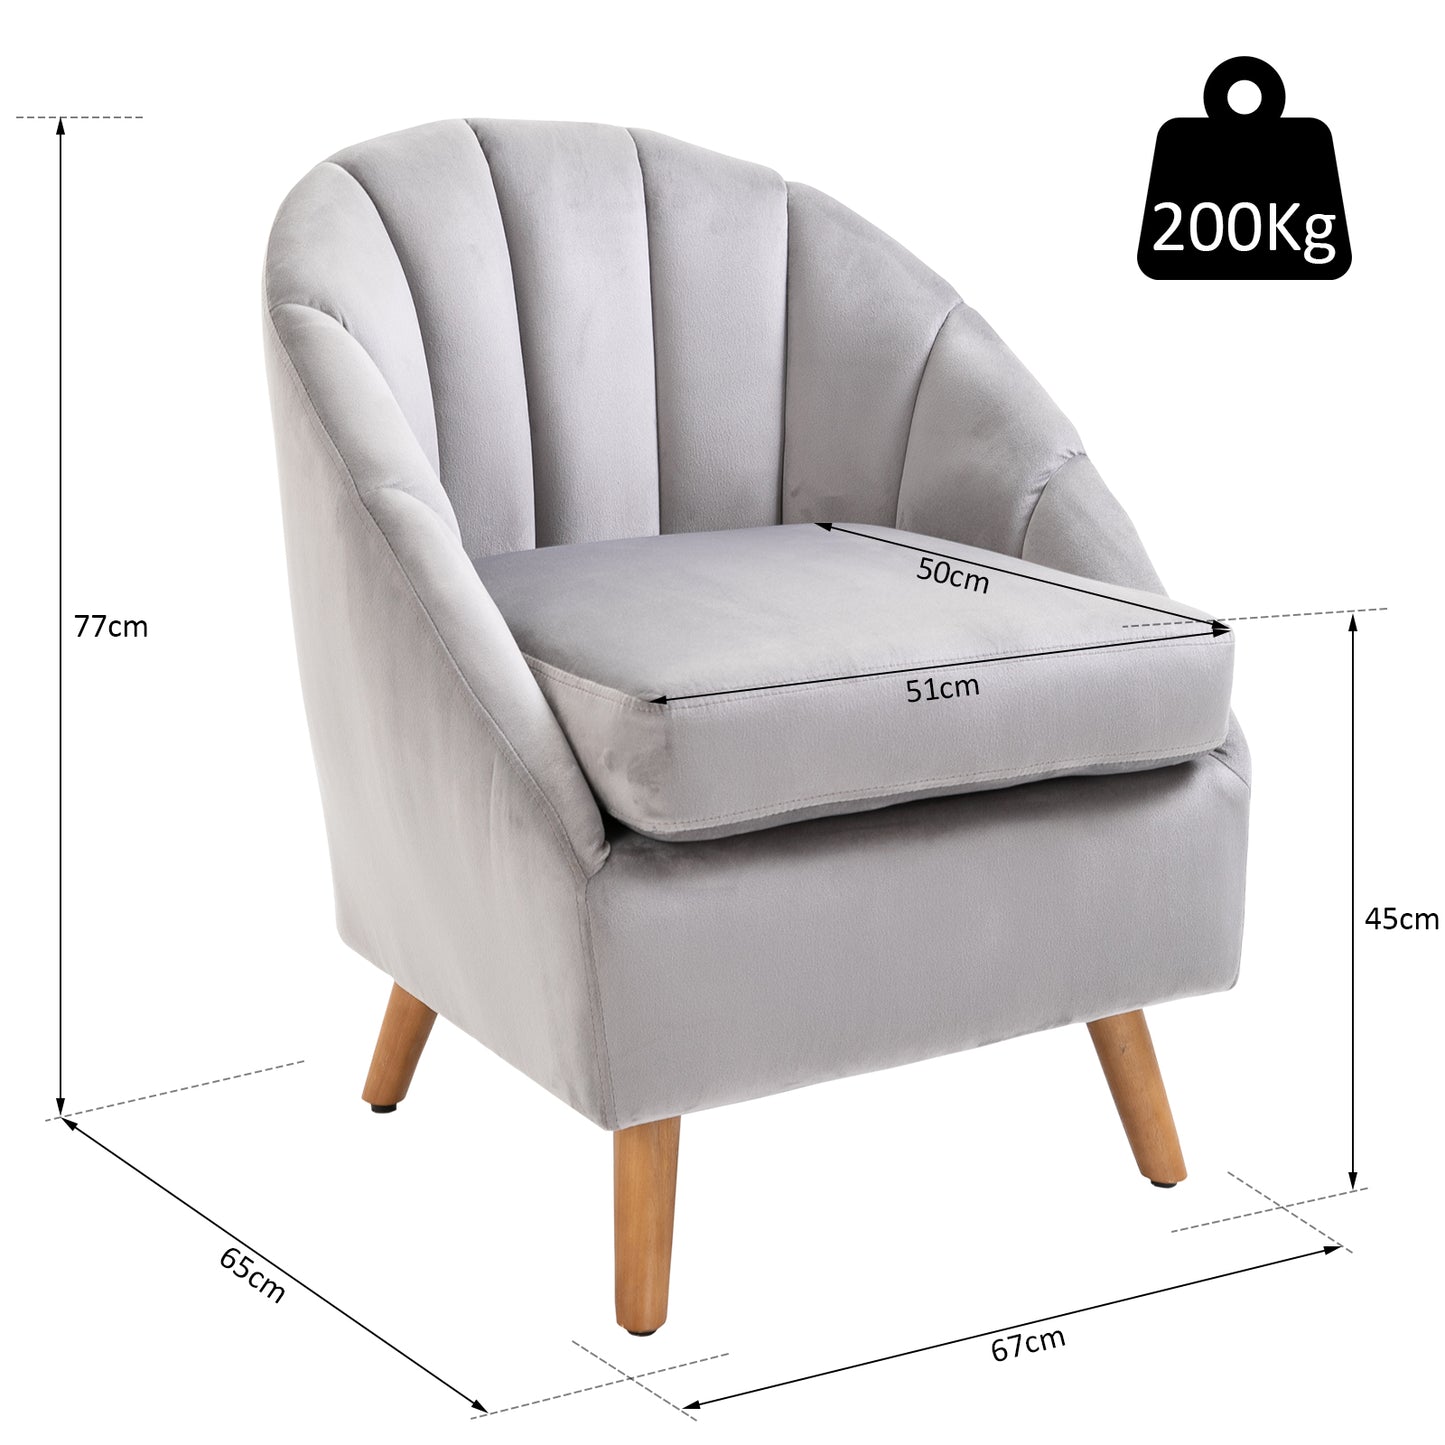 HOMCOM Decadent Single Lounge Chair in Velvet-Look Upholstery w/ Wooden Legs Grey